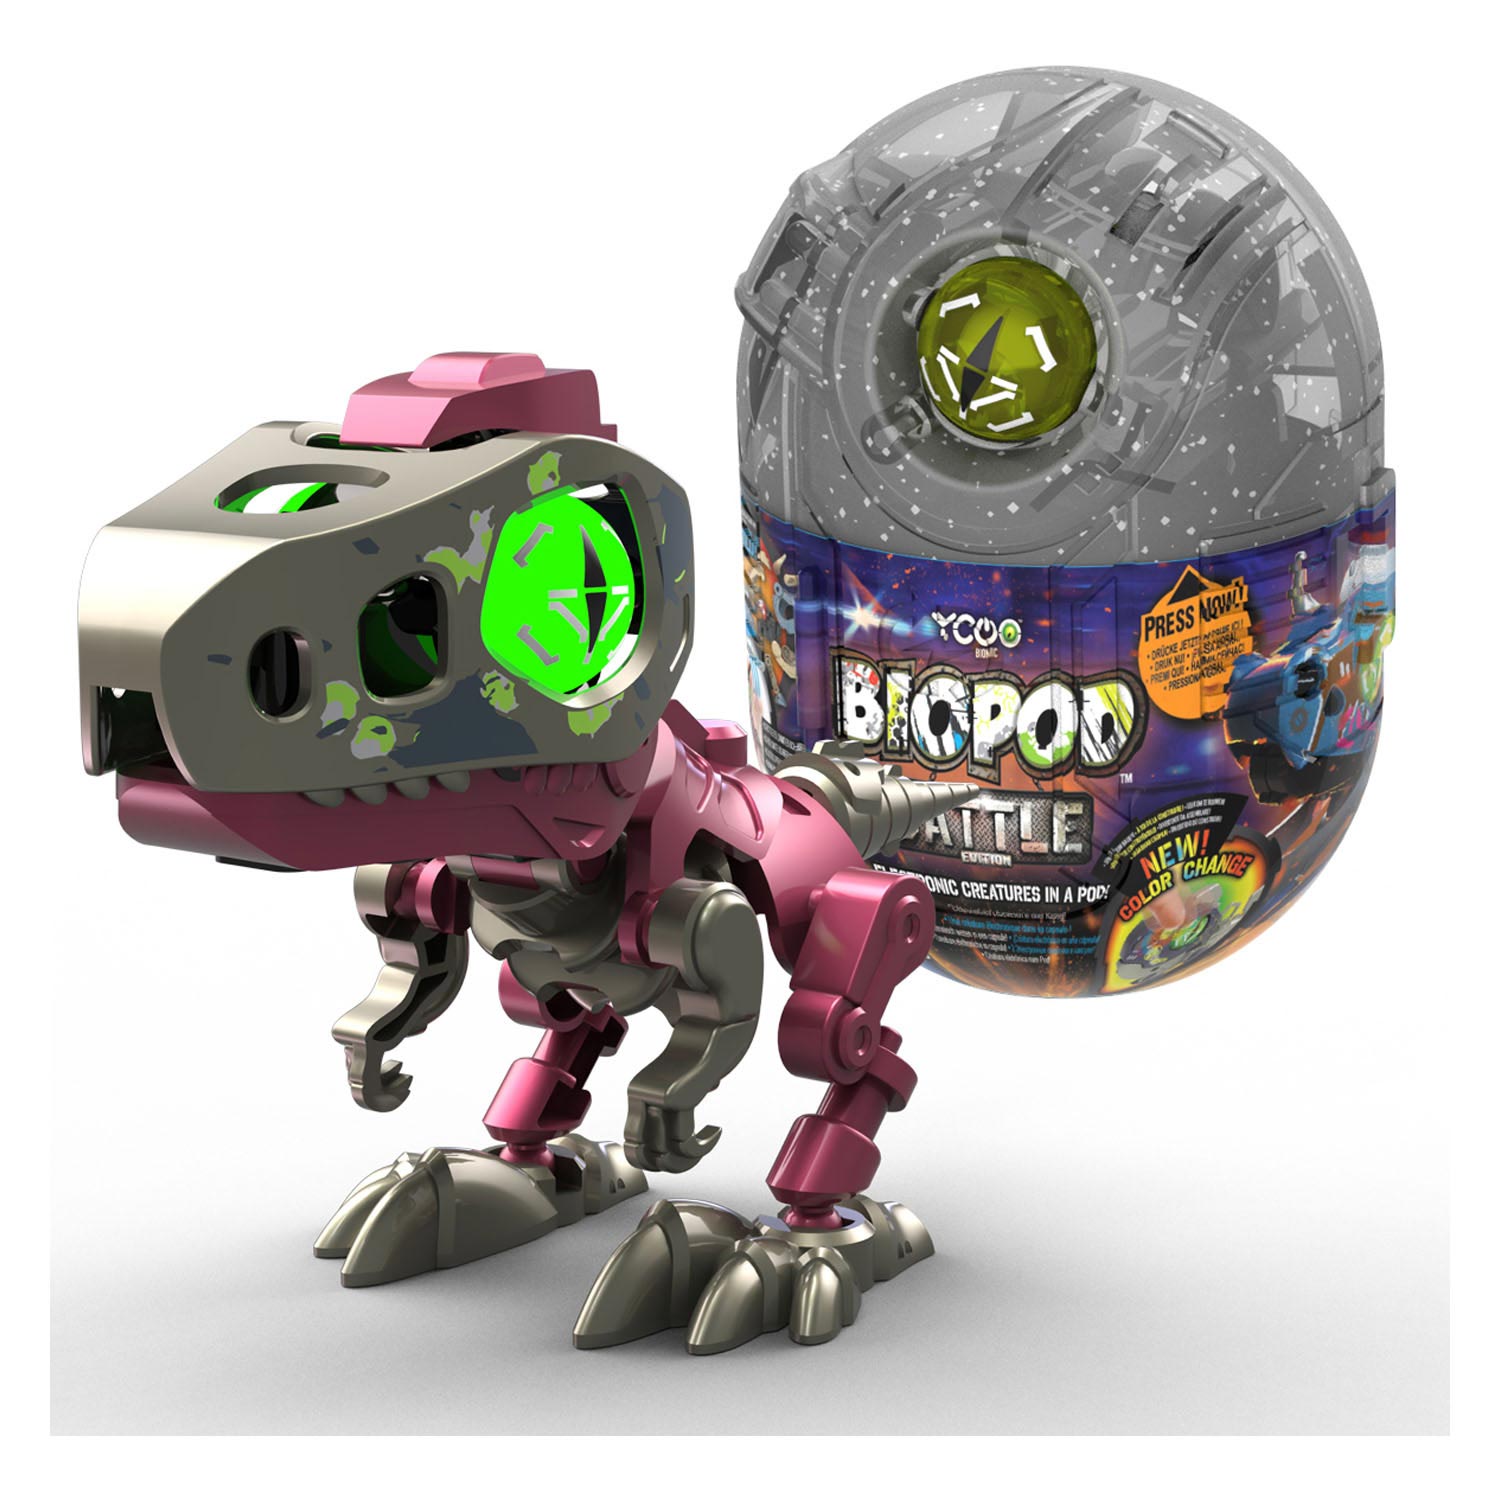 Mega Biopod Cyber Punk Ycoo dinosaur robot